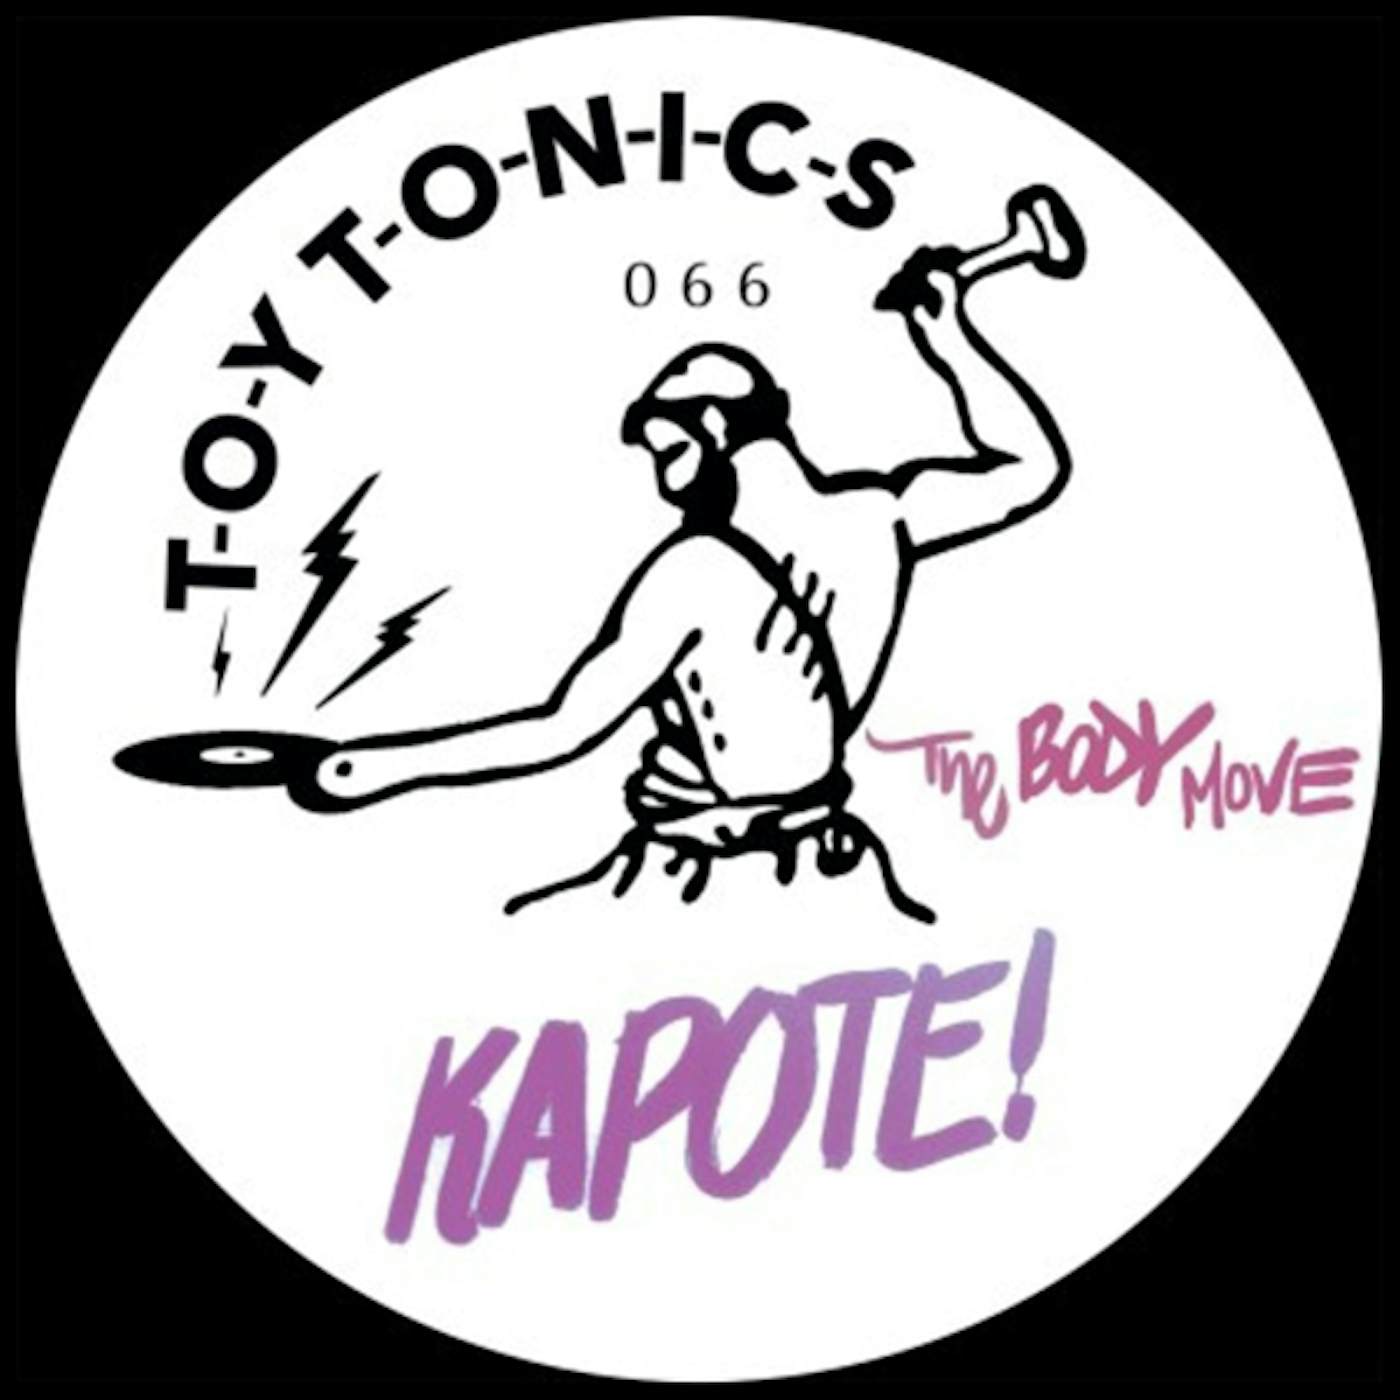 Kapote BODY MOVE Vinyl Record